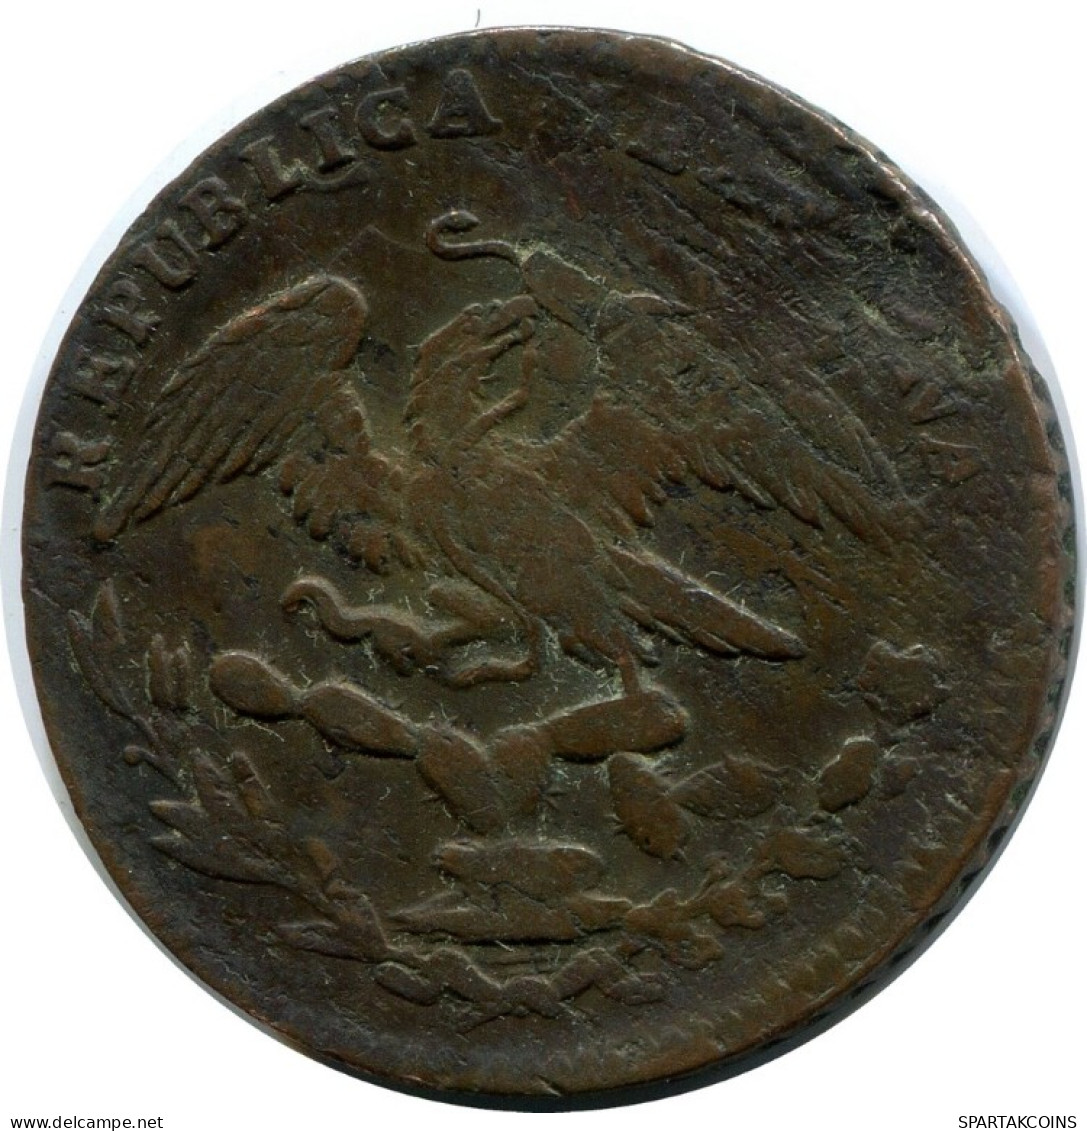 1/4 REAL 1835 MA "Quarto/Quartilla" MEXICO Coin #AH387.5.U.A - Messico